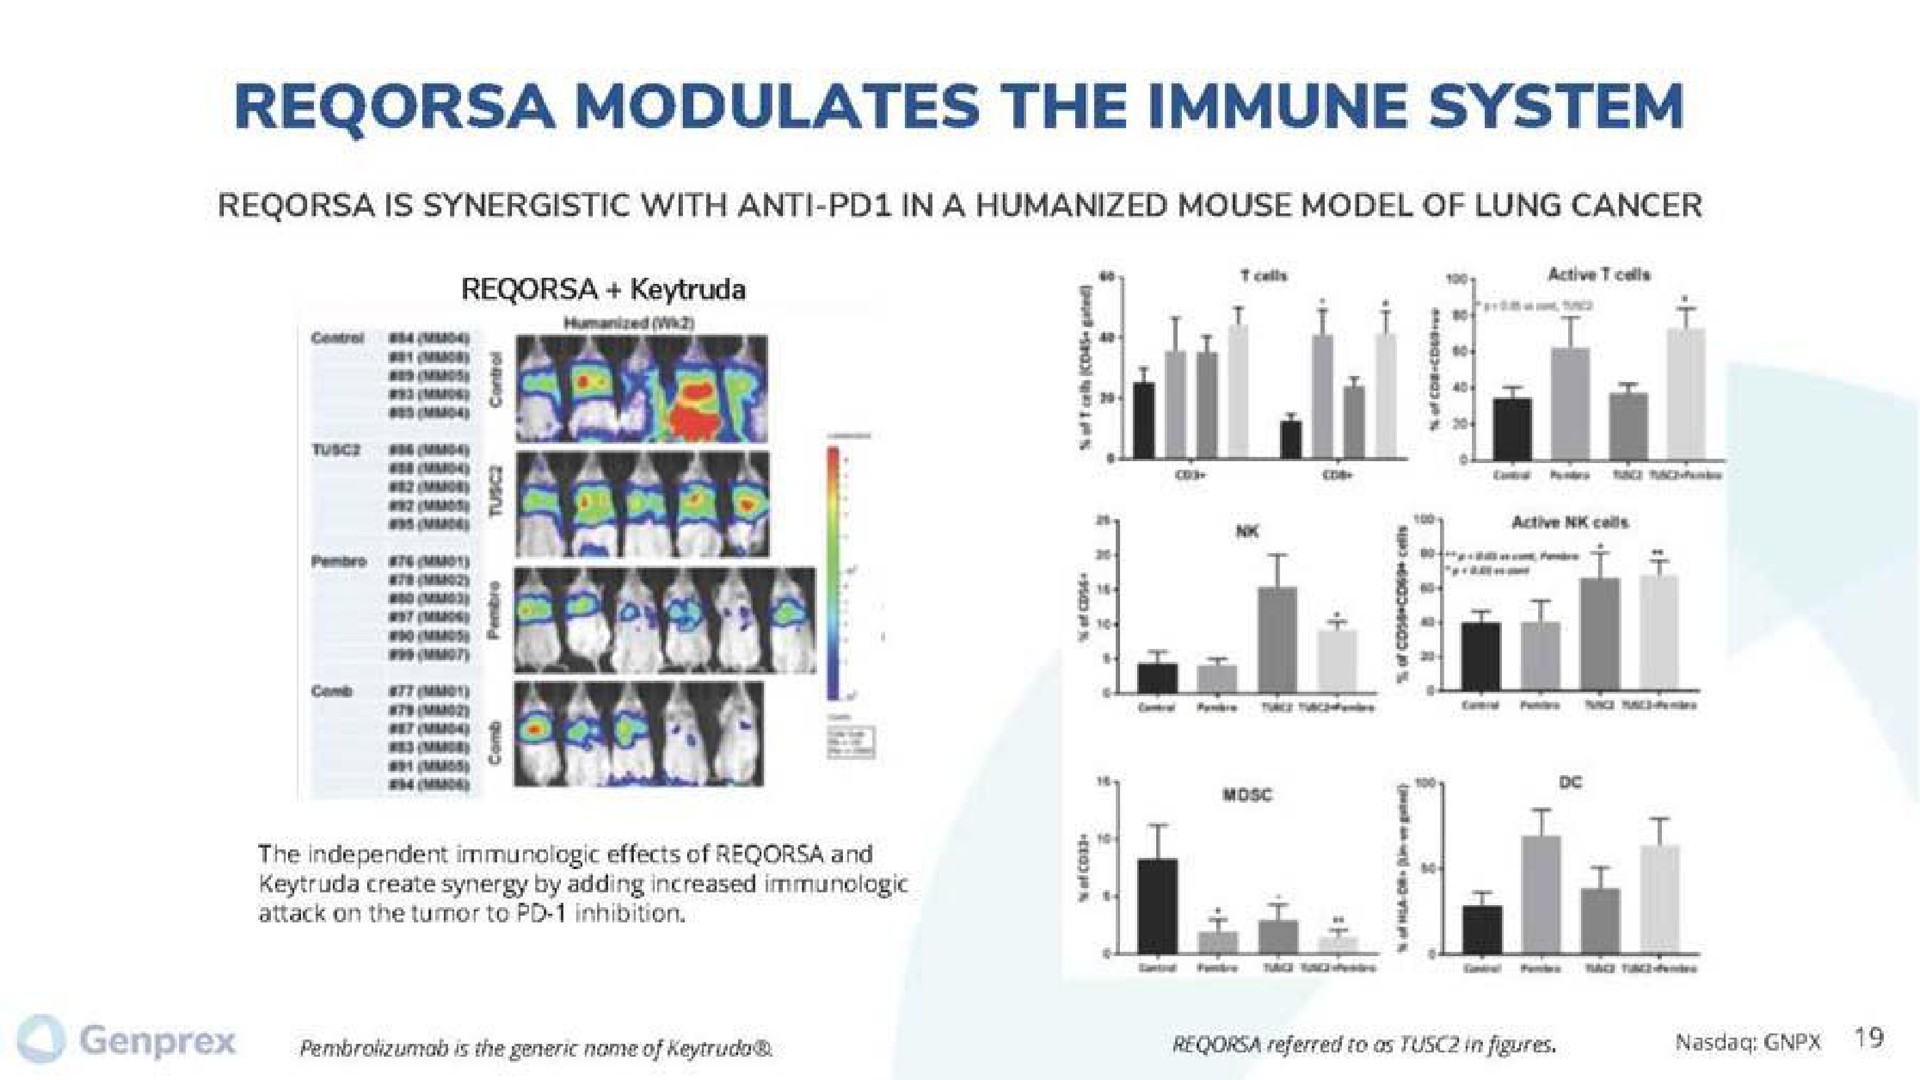 modulates the immune system | Genprex